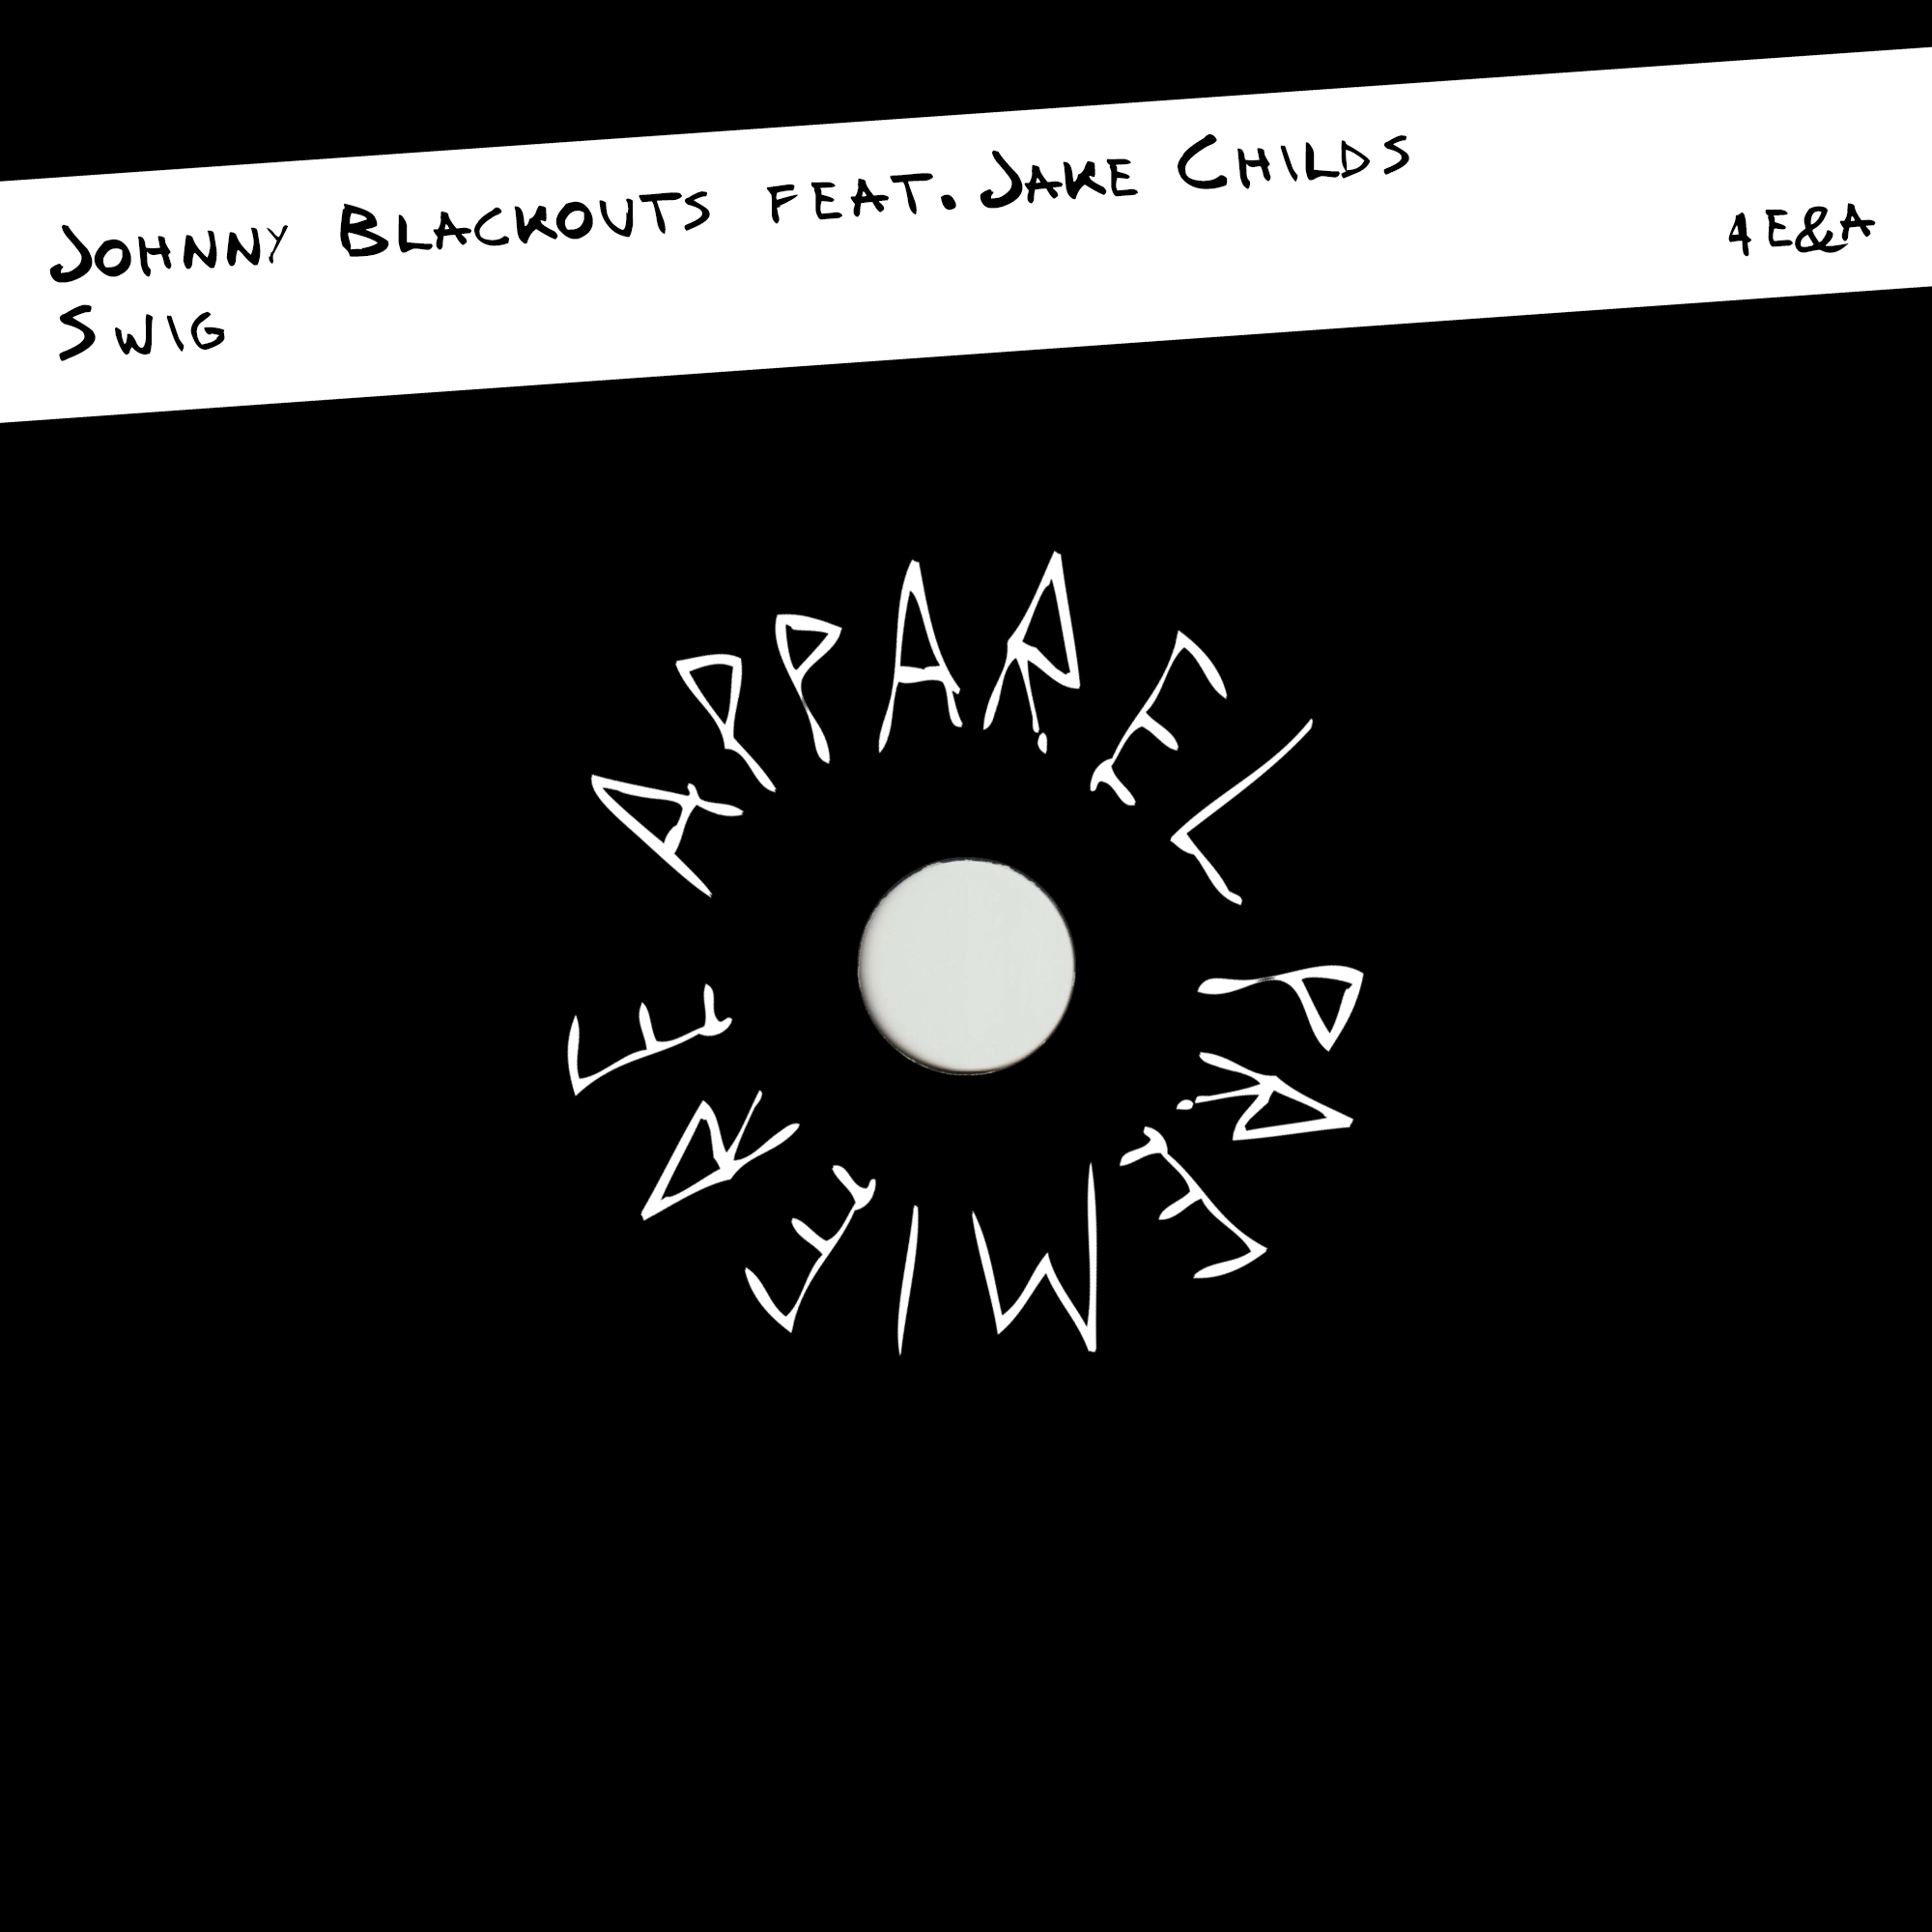 APPAREL PREMIERE Johnny Blackouts feat. Jake Childs Swig [4E&A]